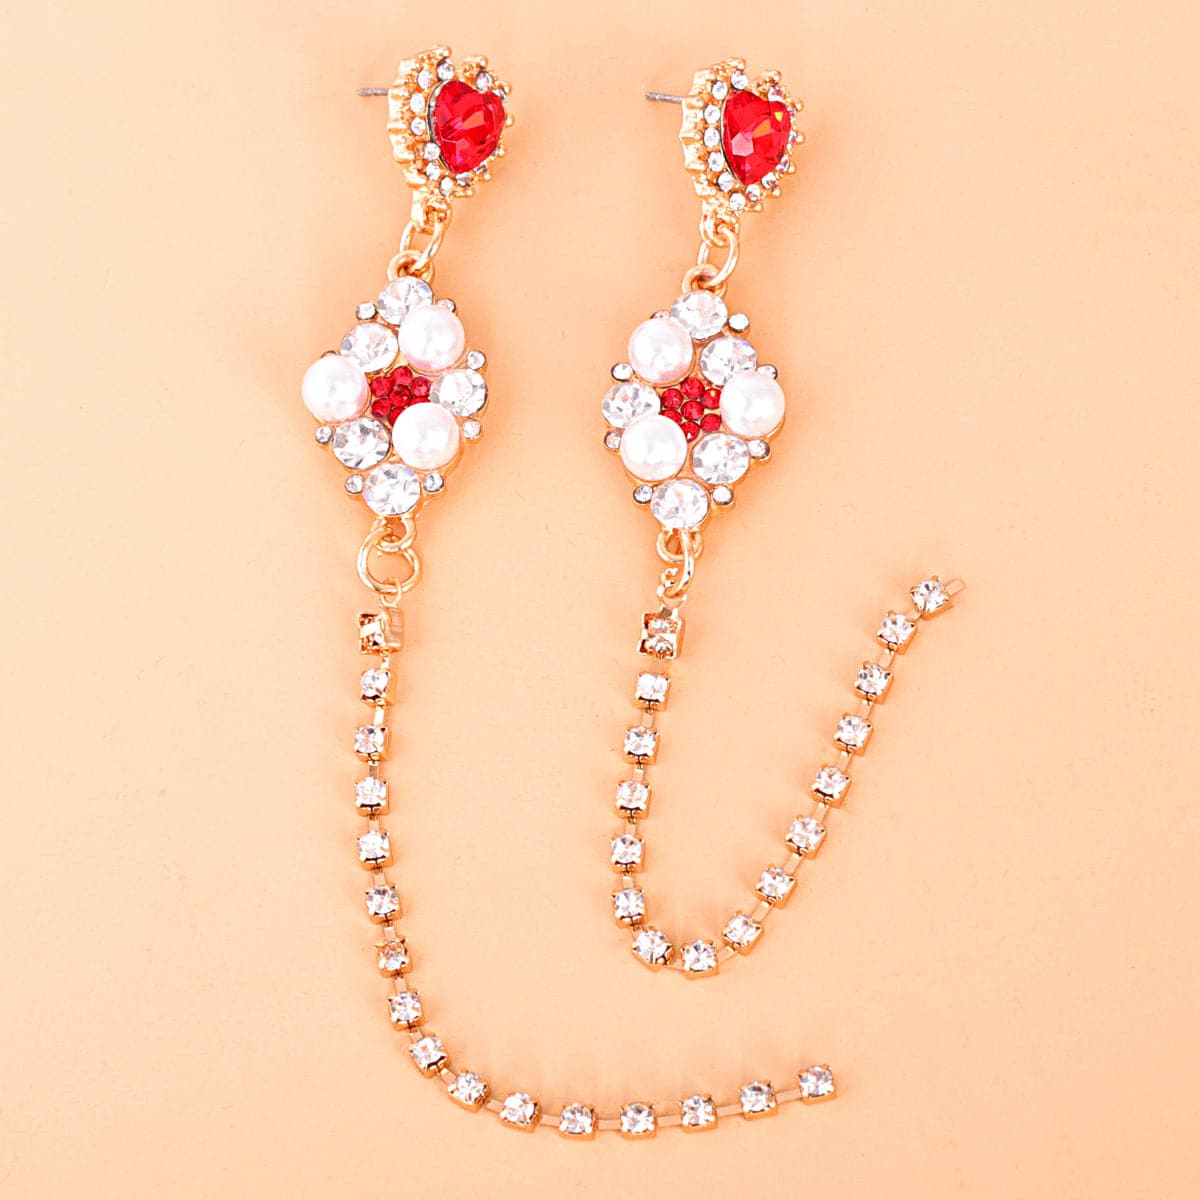 Red Cubic Zirconia & Pearl 18K Gold-Plated Heart Drop Earrings